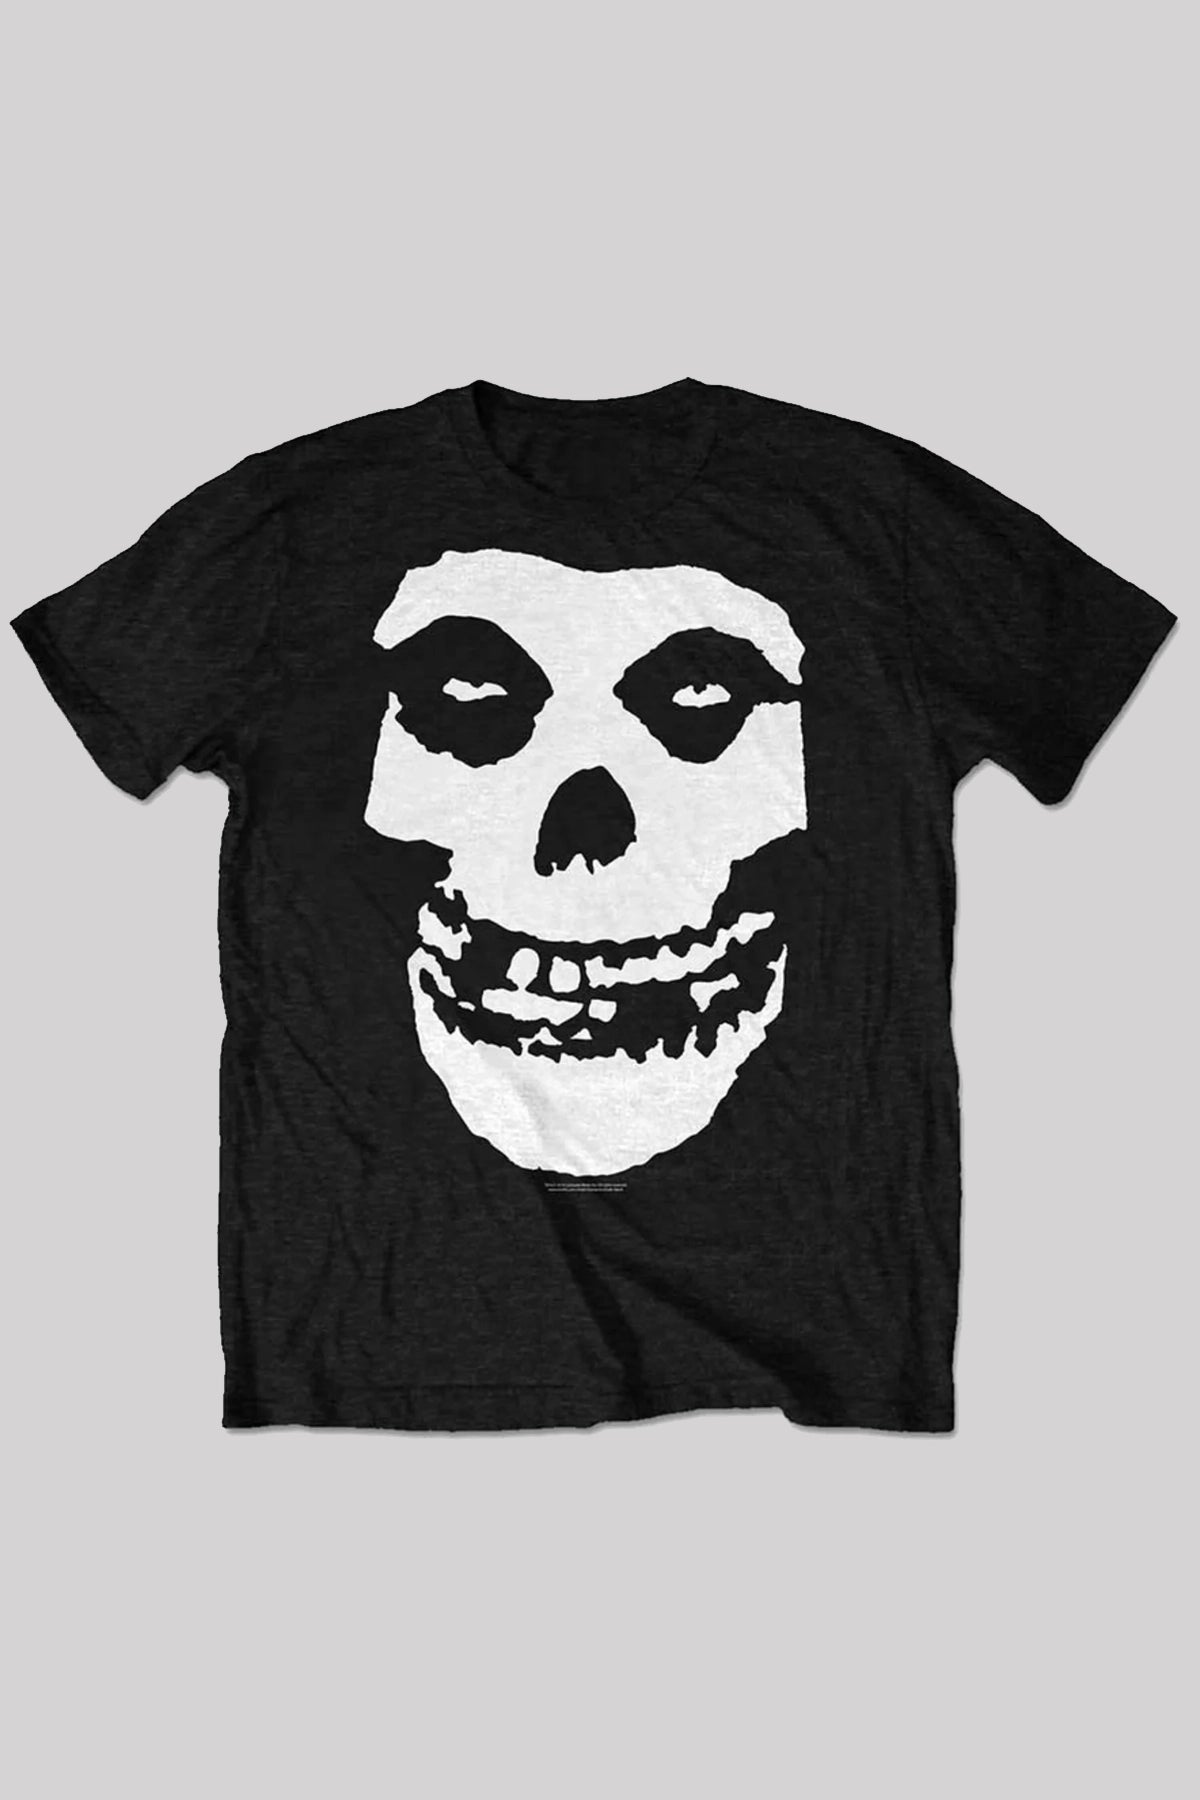 Misfits Skull Black White T-Shirt